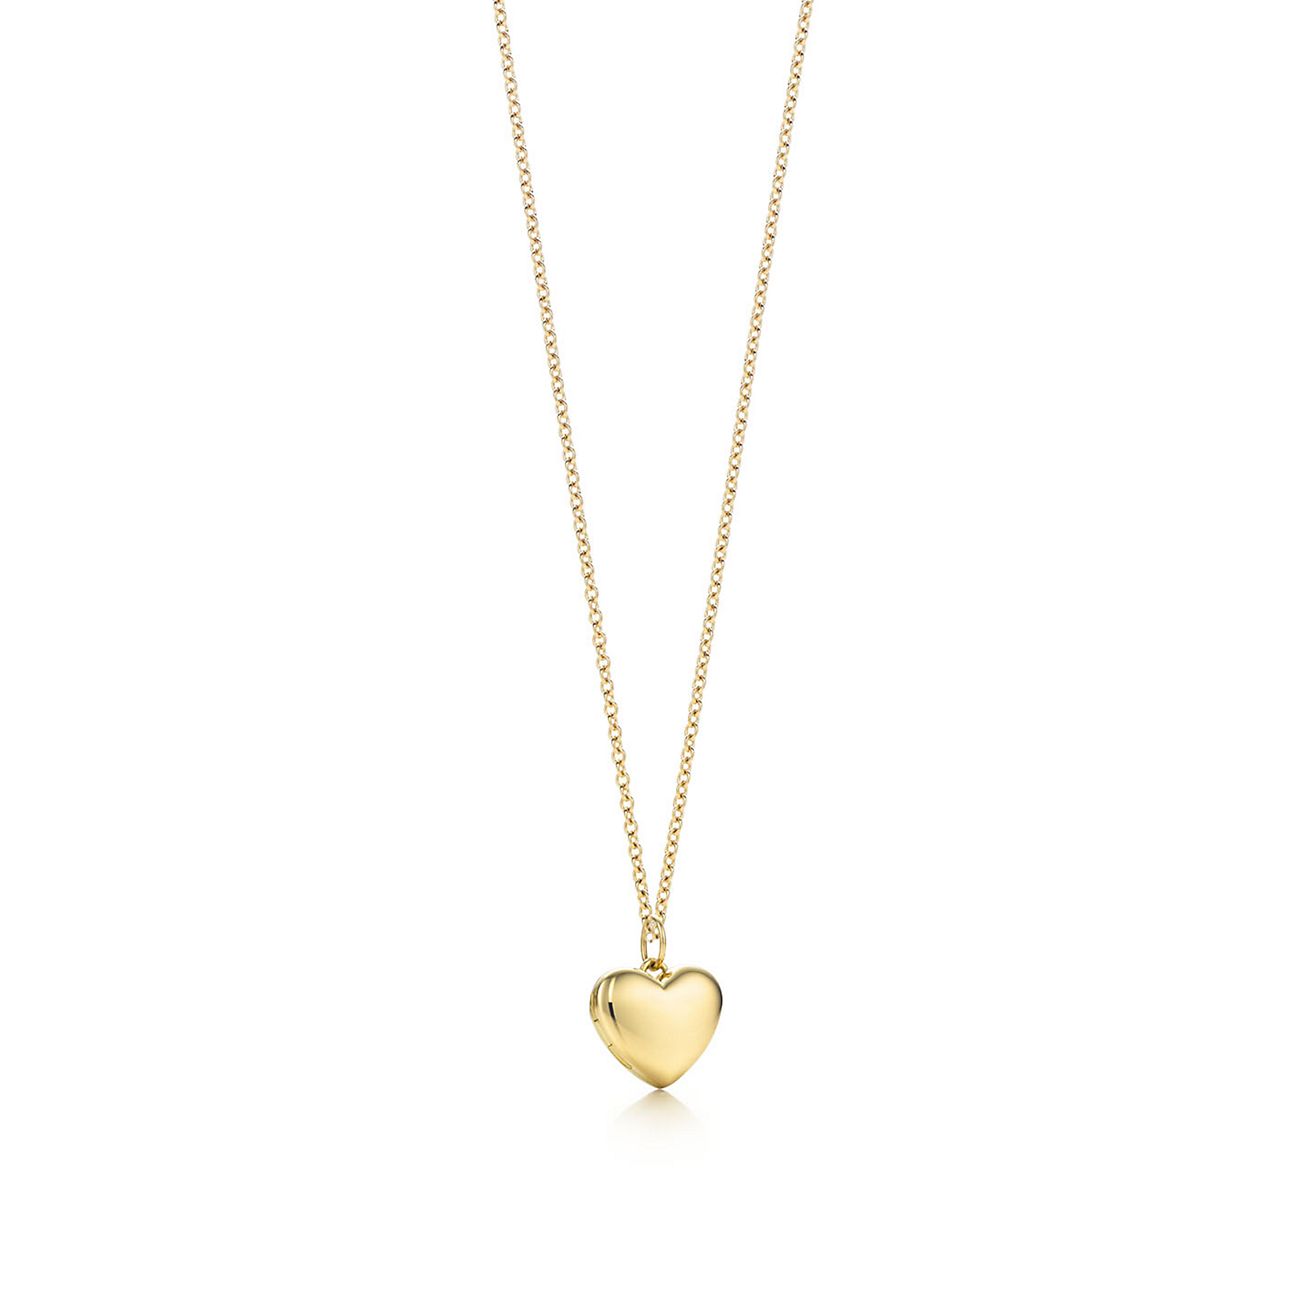 Heart locket pendant in 18k gold, small 